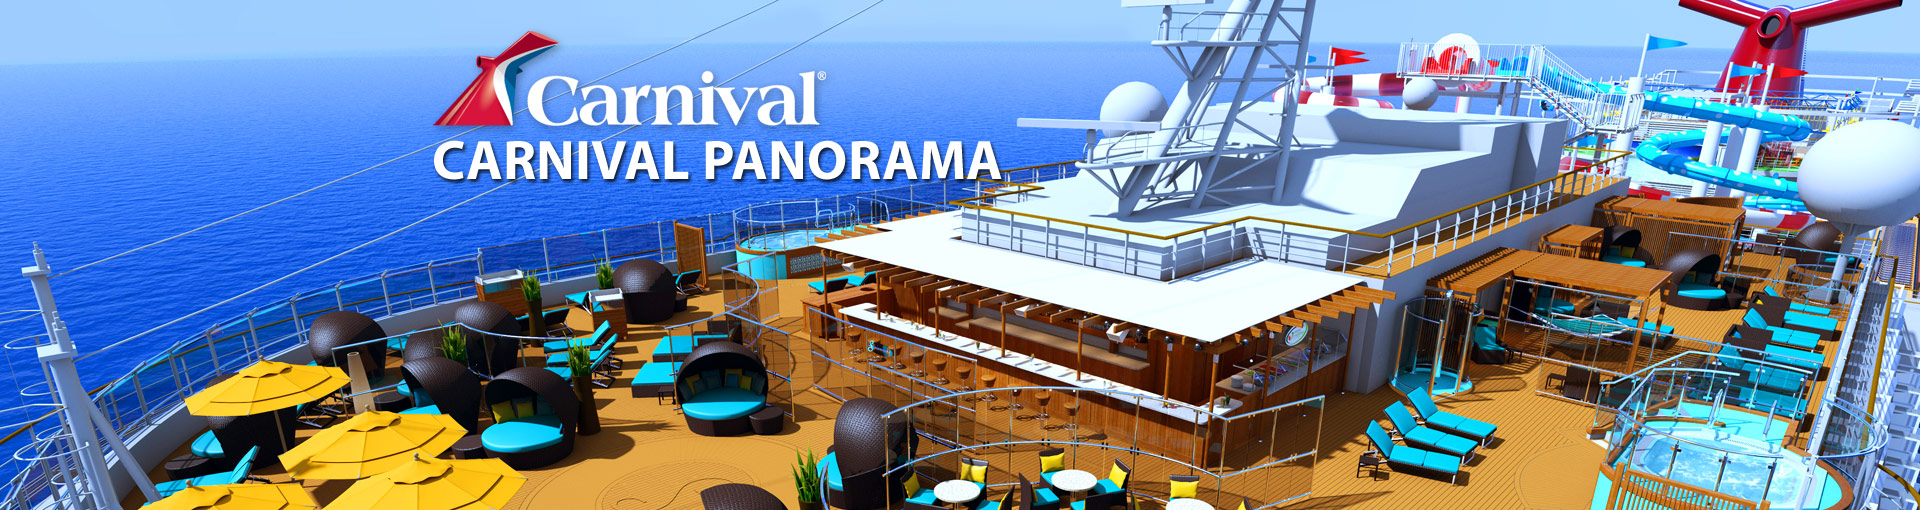 carnival panorama video tour